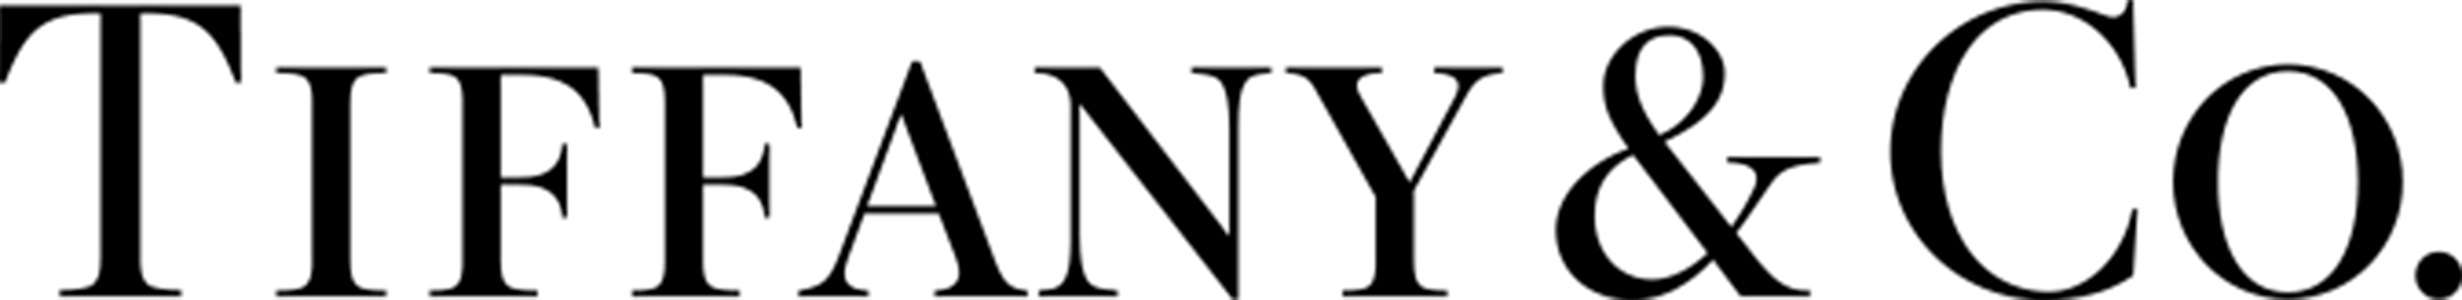 Tiffany Logo Black.png